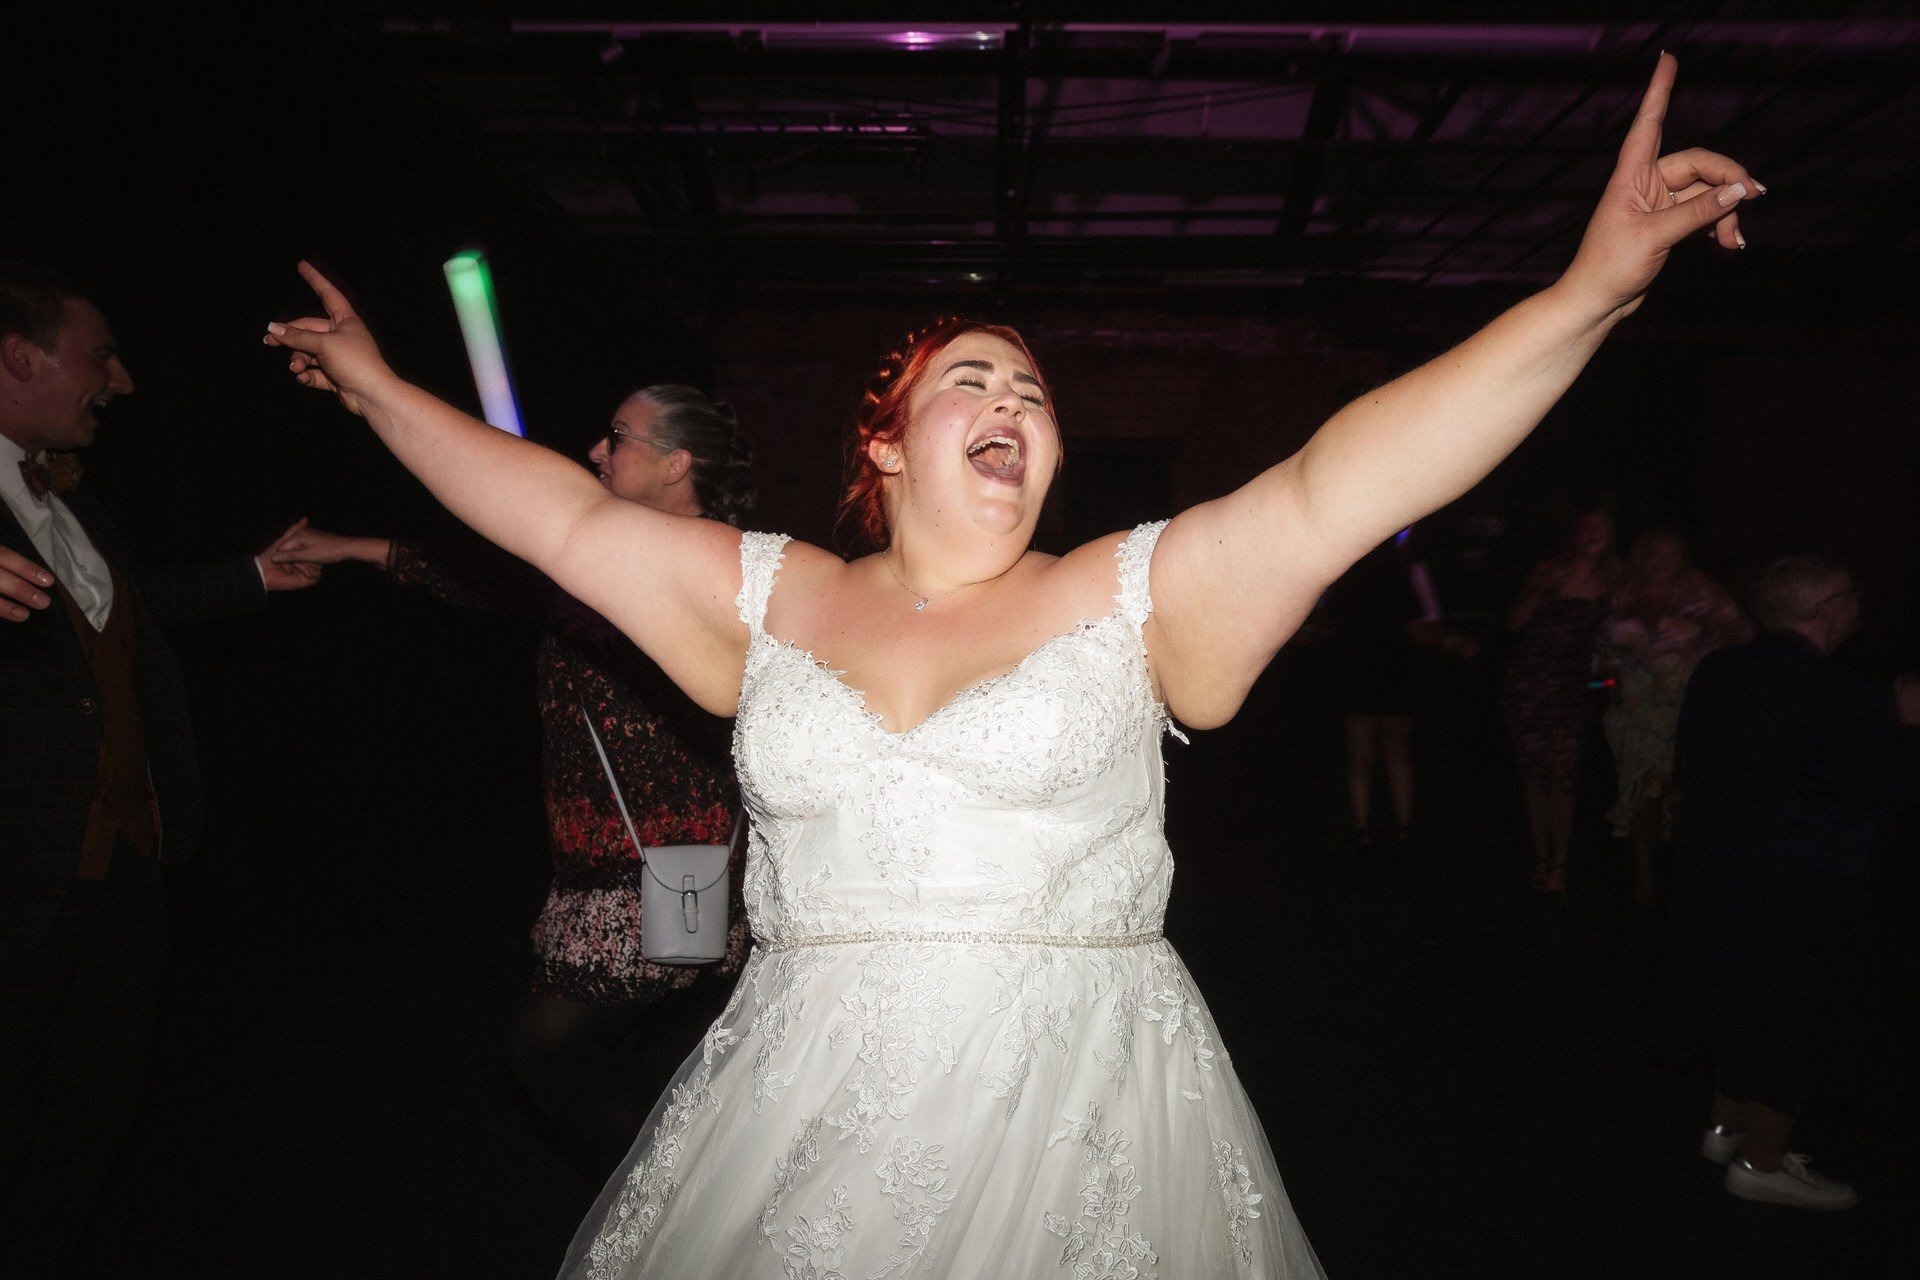 Uninhibited Joy in Alternative Wedding Photography